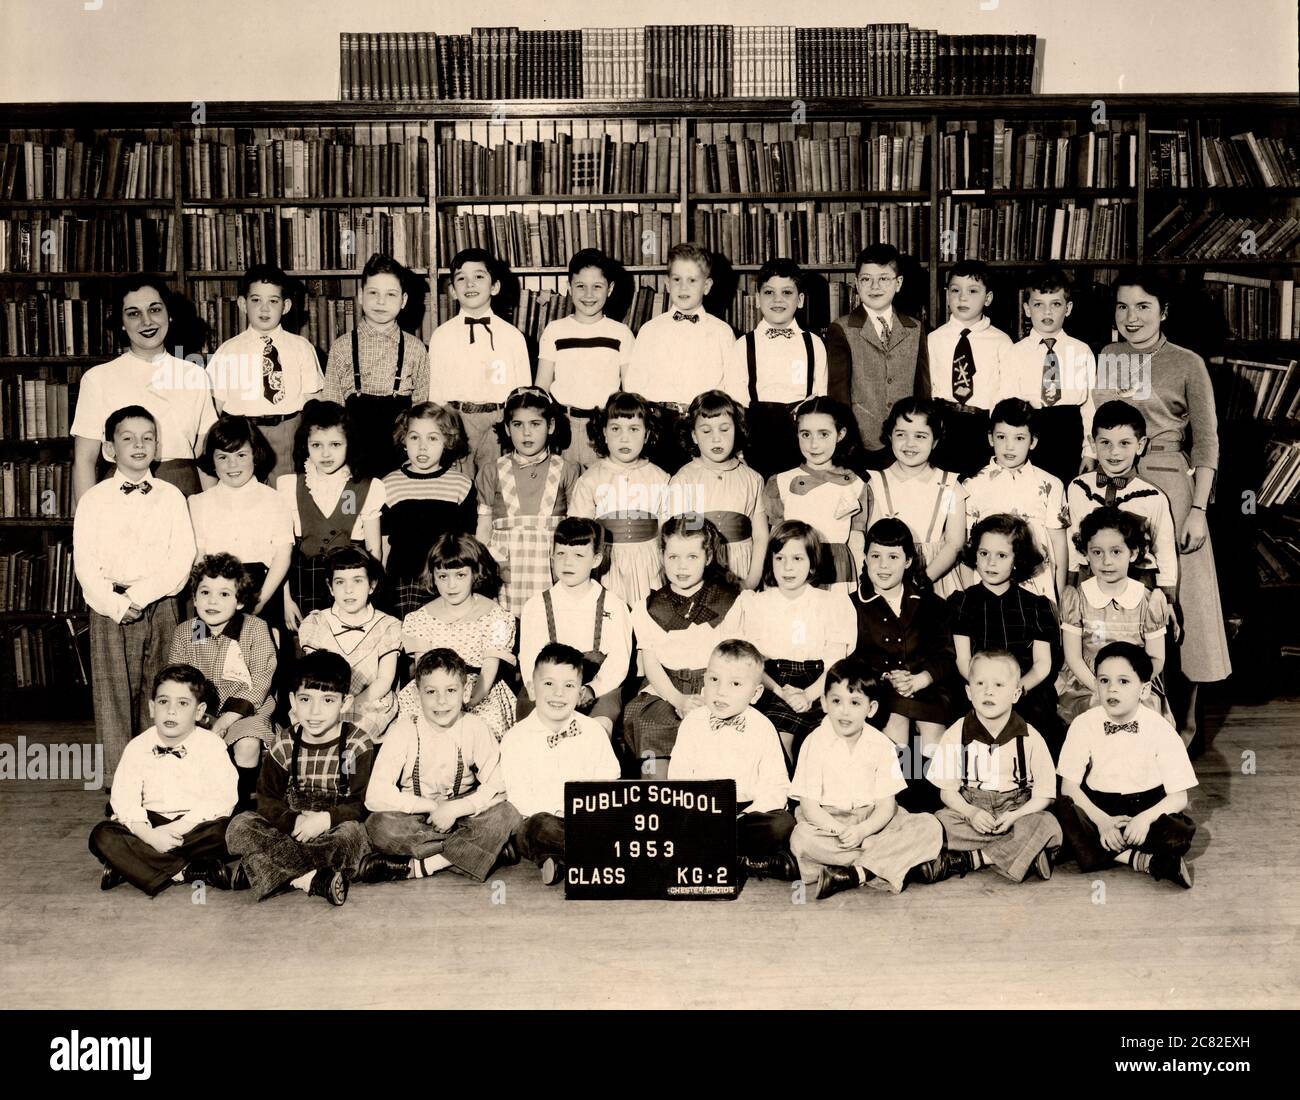 Vintage photograph of a school classroom photo of students taken 1953, NY,  USA. Stock Photo